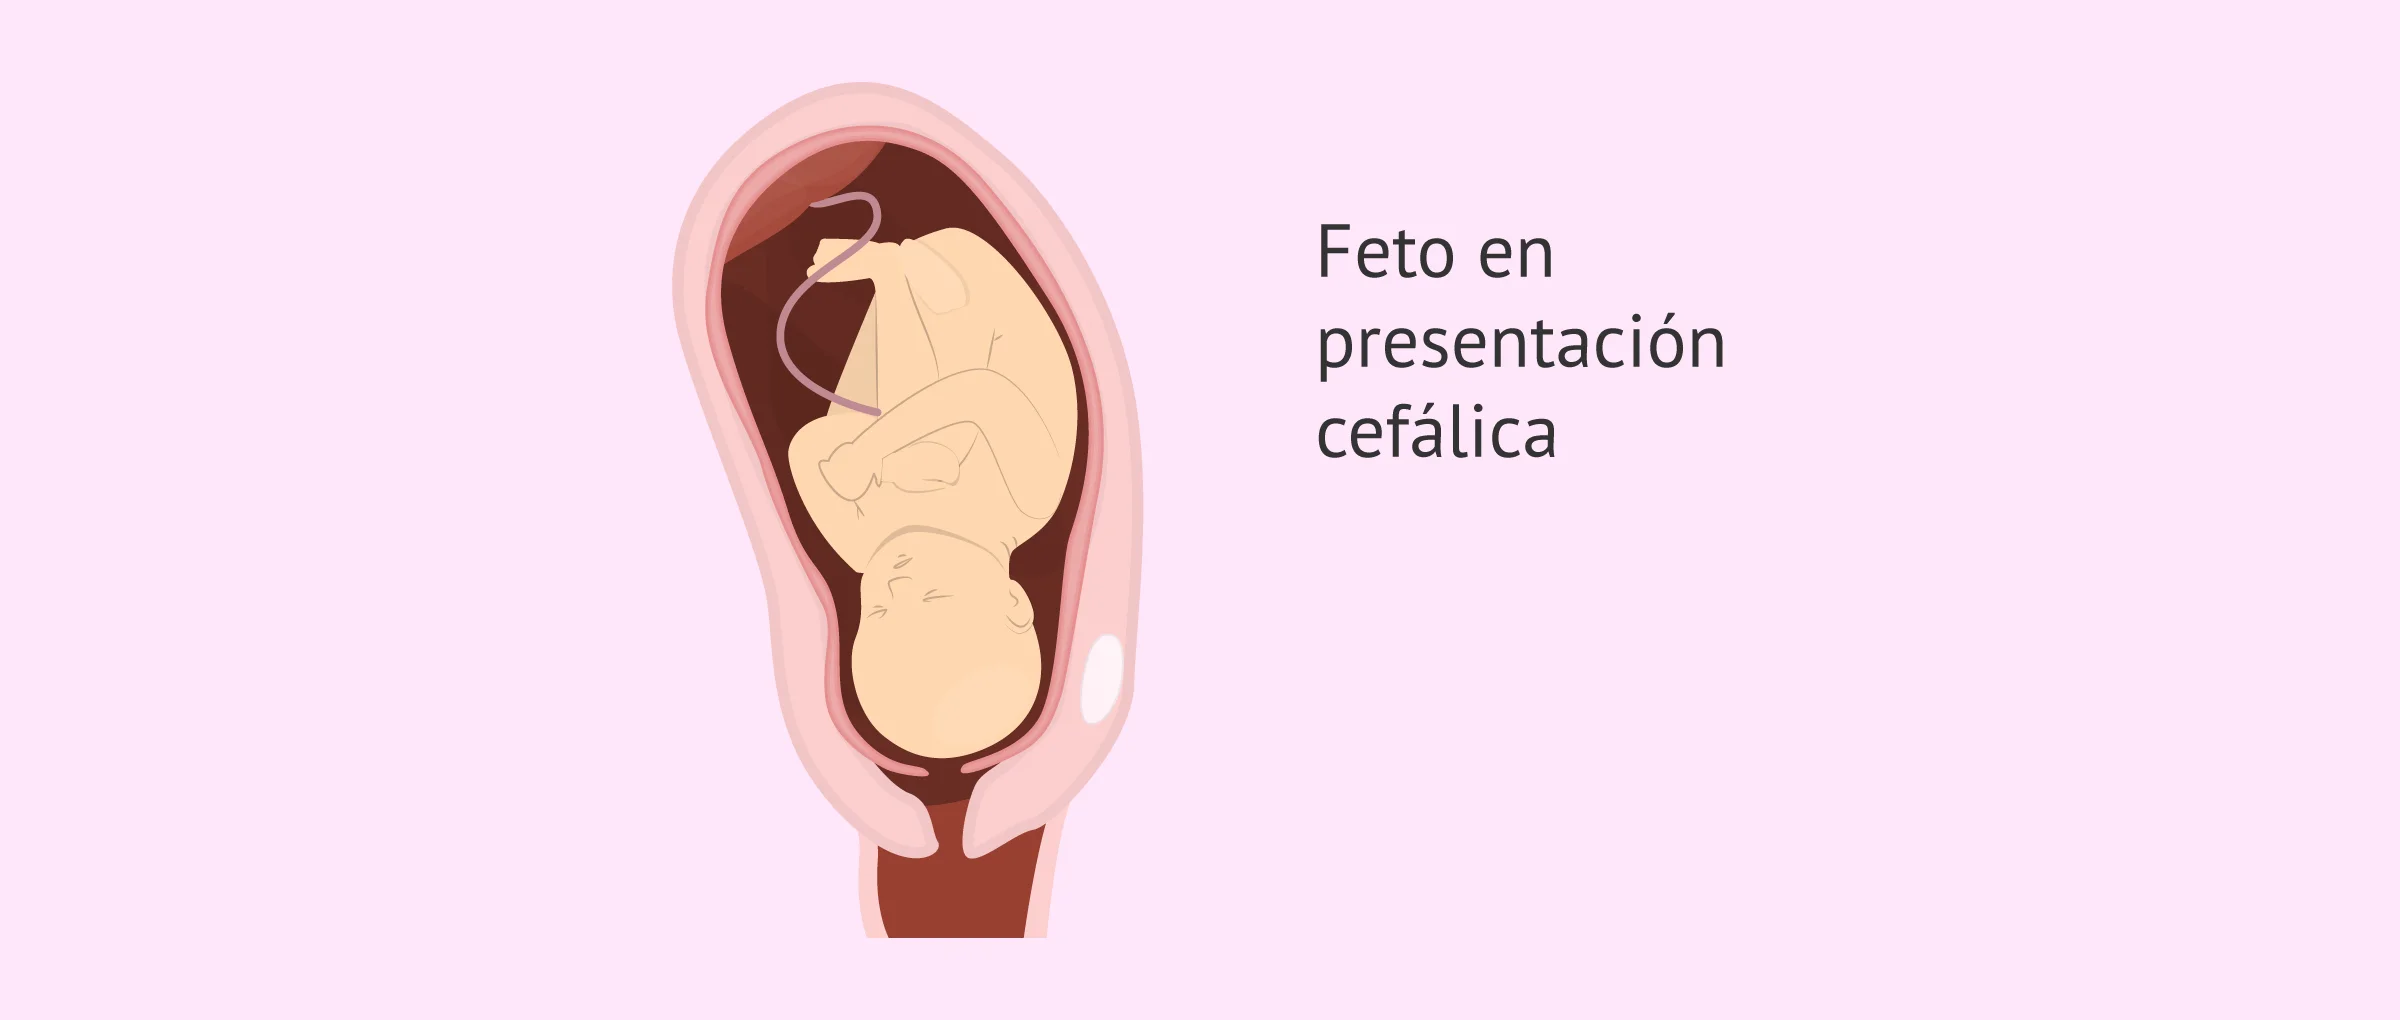 feto-posicion-cefalica-glosario